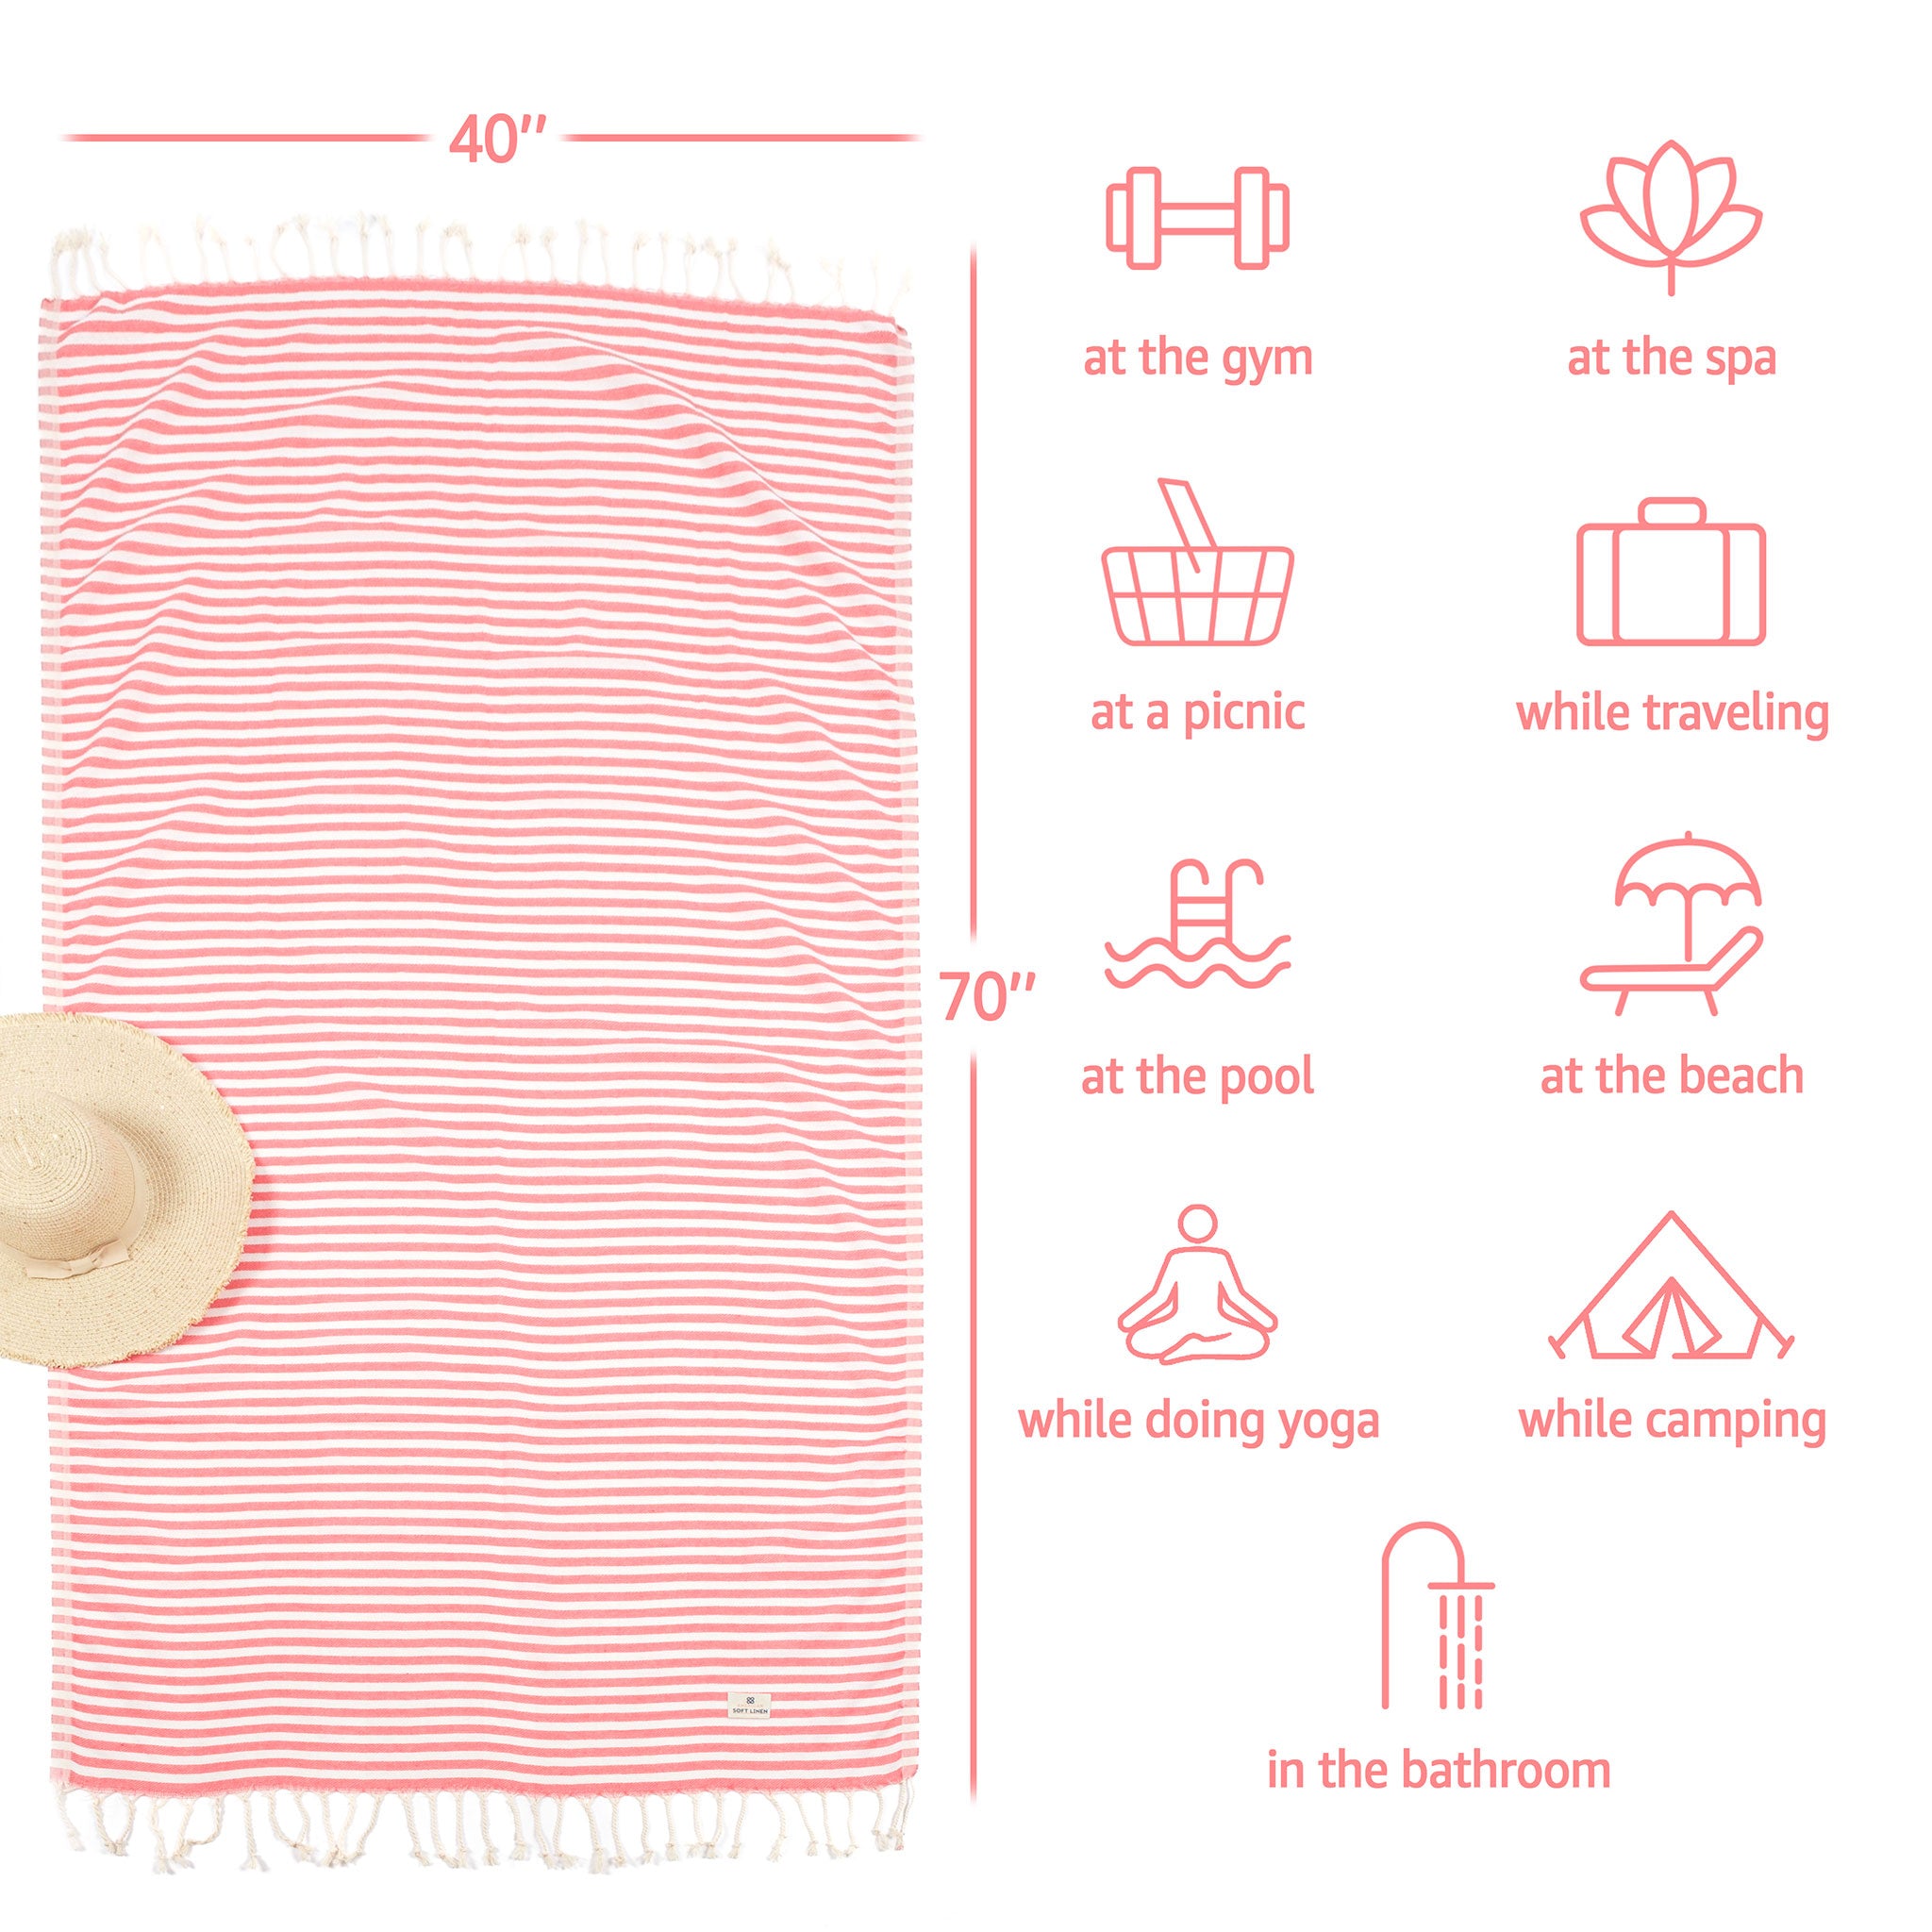 American Soft Linen - 100% Cotton Turkish Peshtemal Towels 40x70 Inches - Coral-Stripe - 4